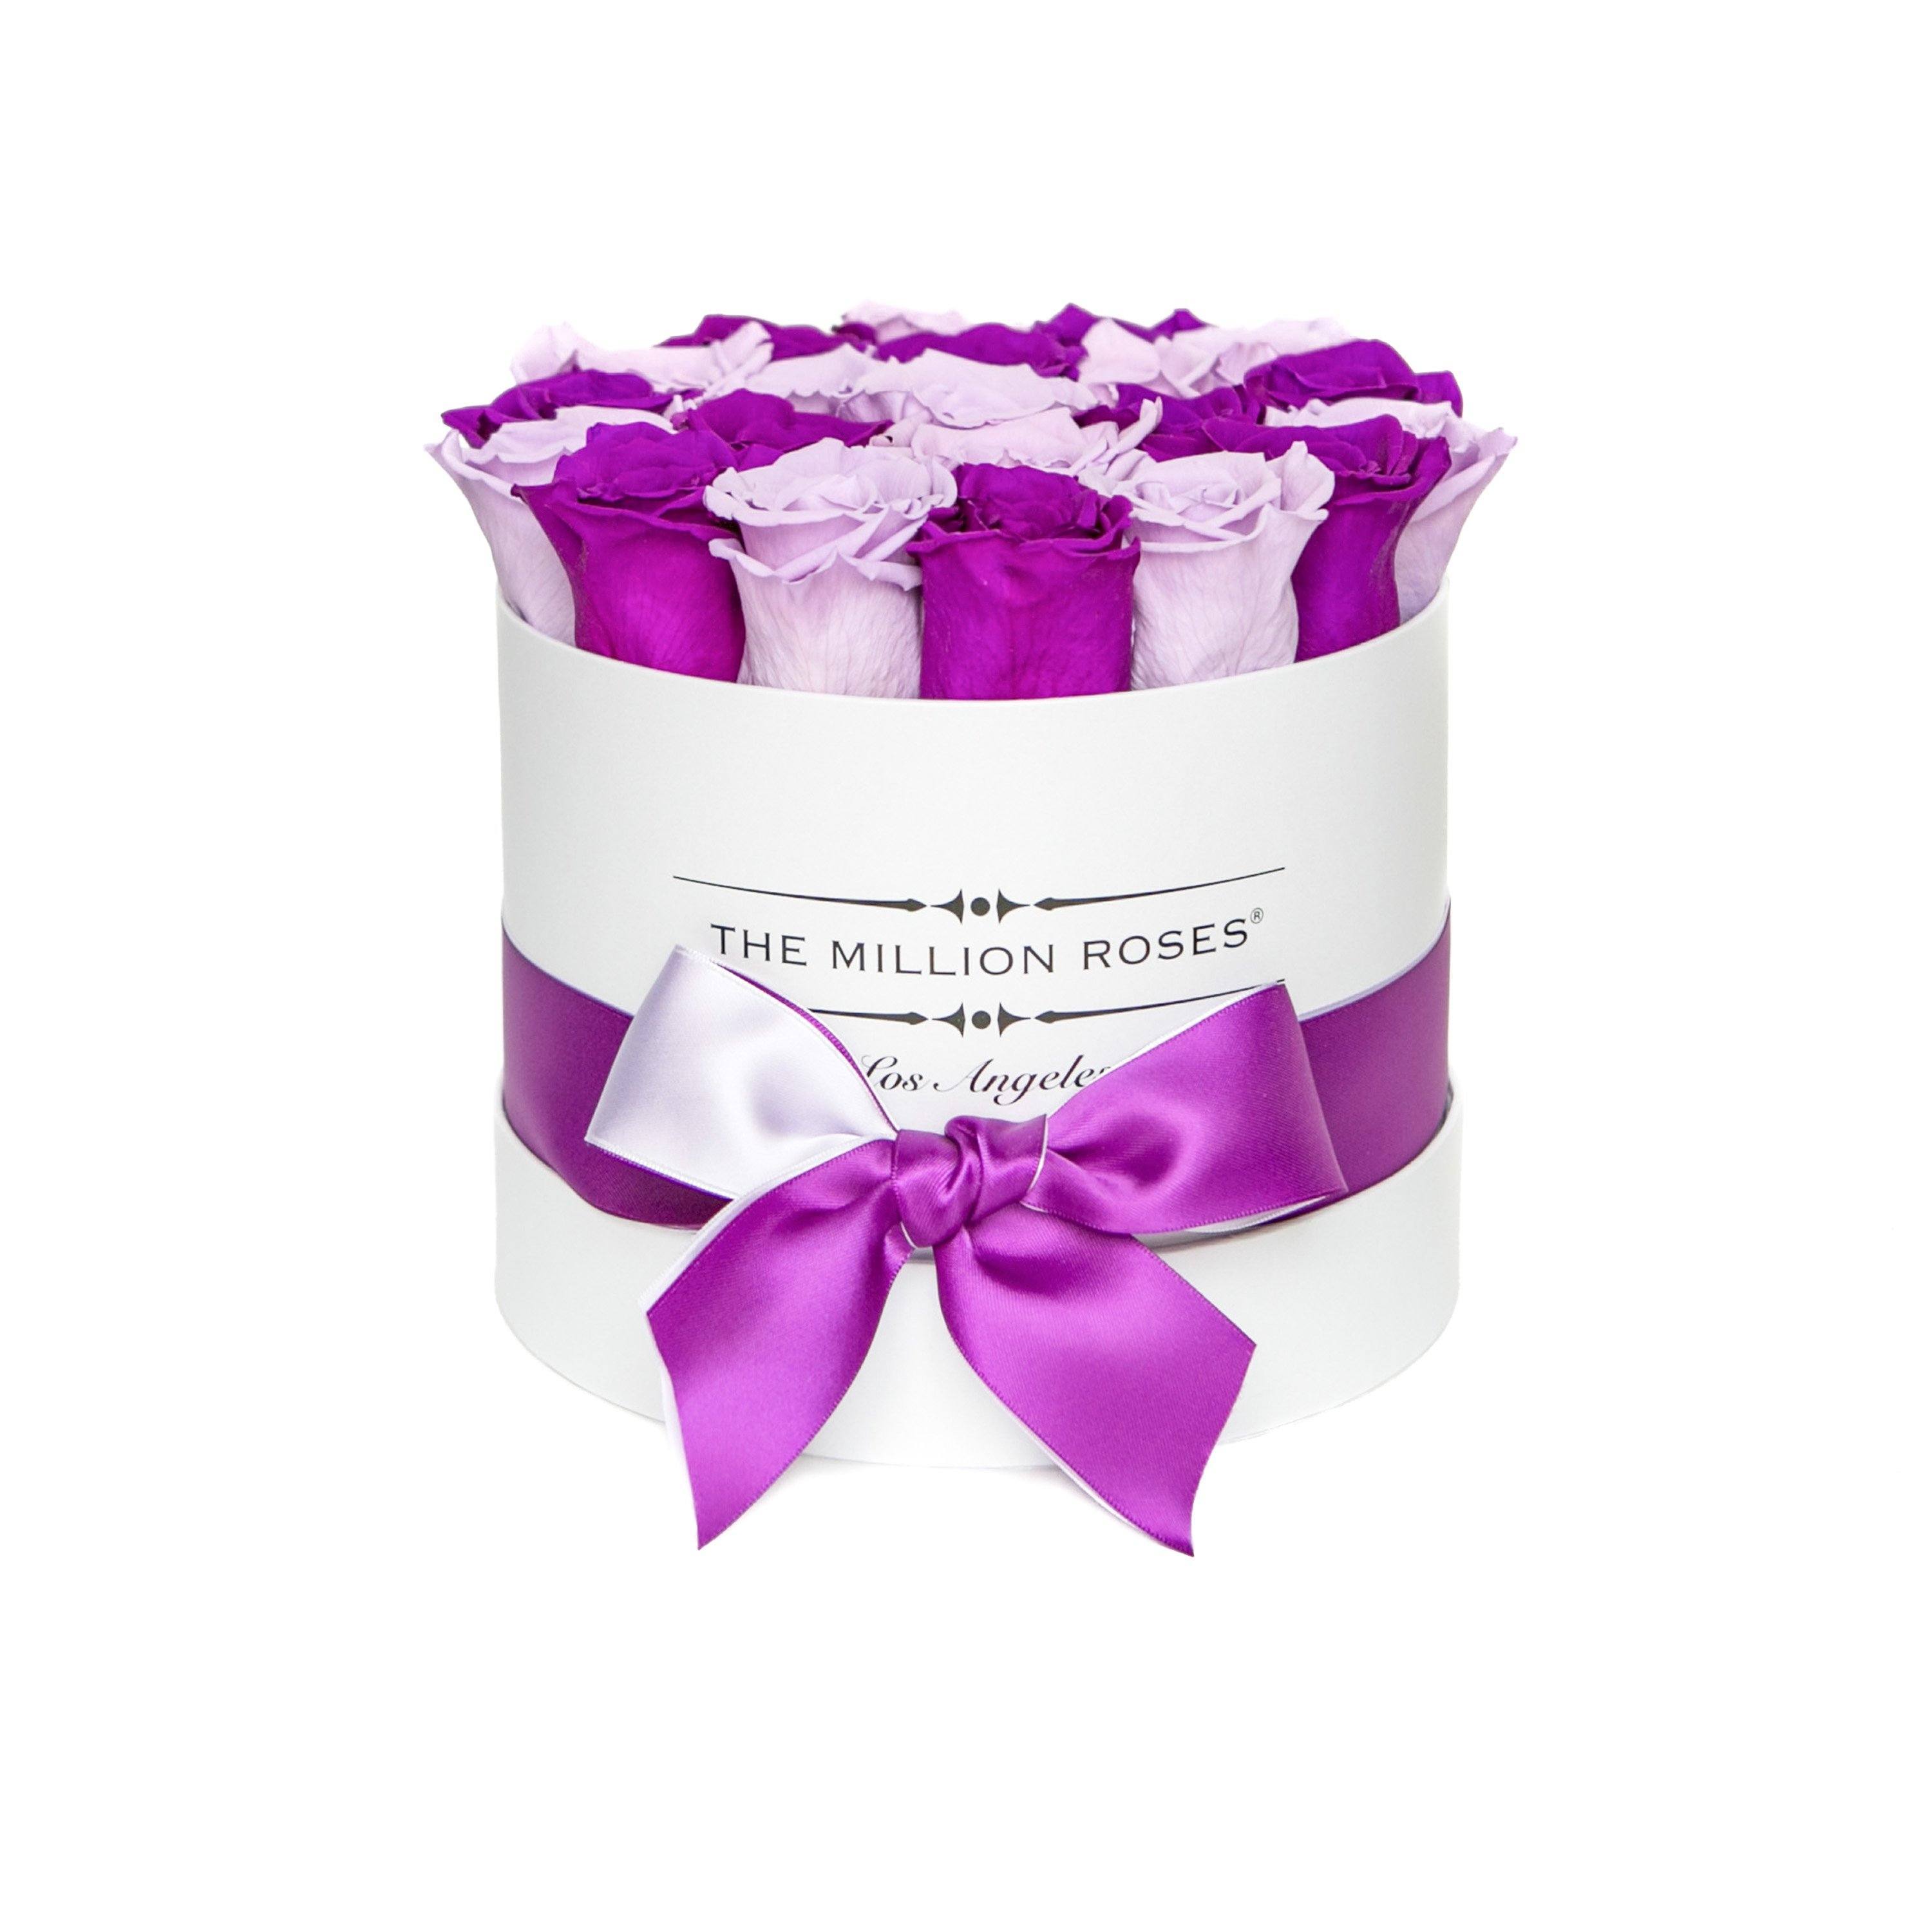 classic round box - white - medium-purple&lavender roses purple eternity roses - the million roses